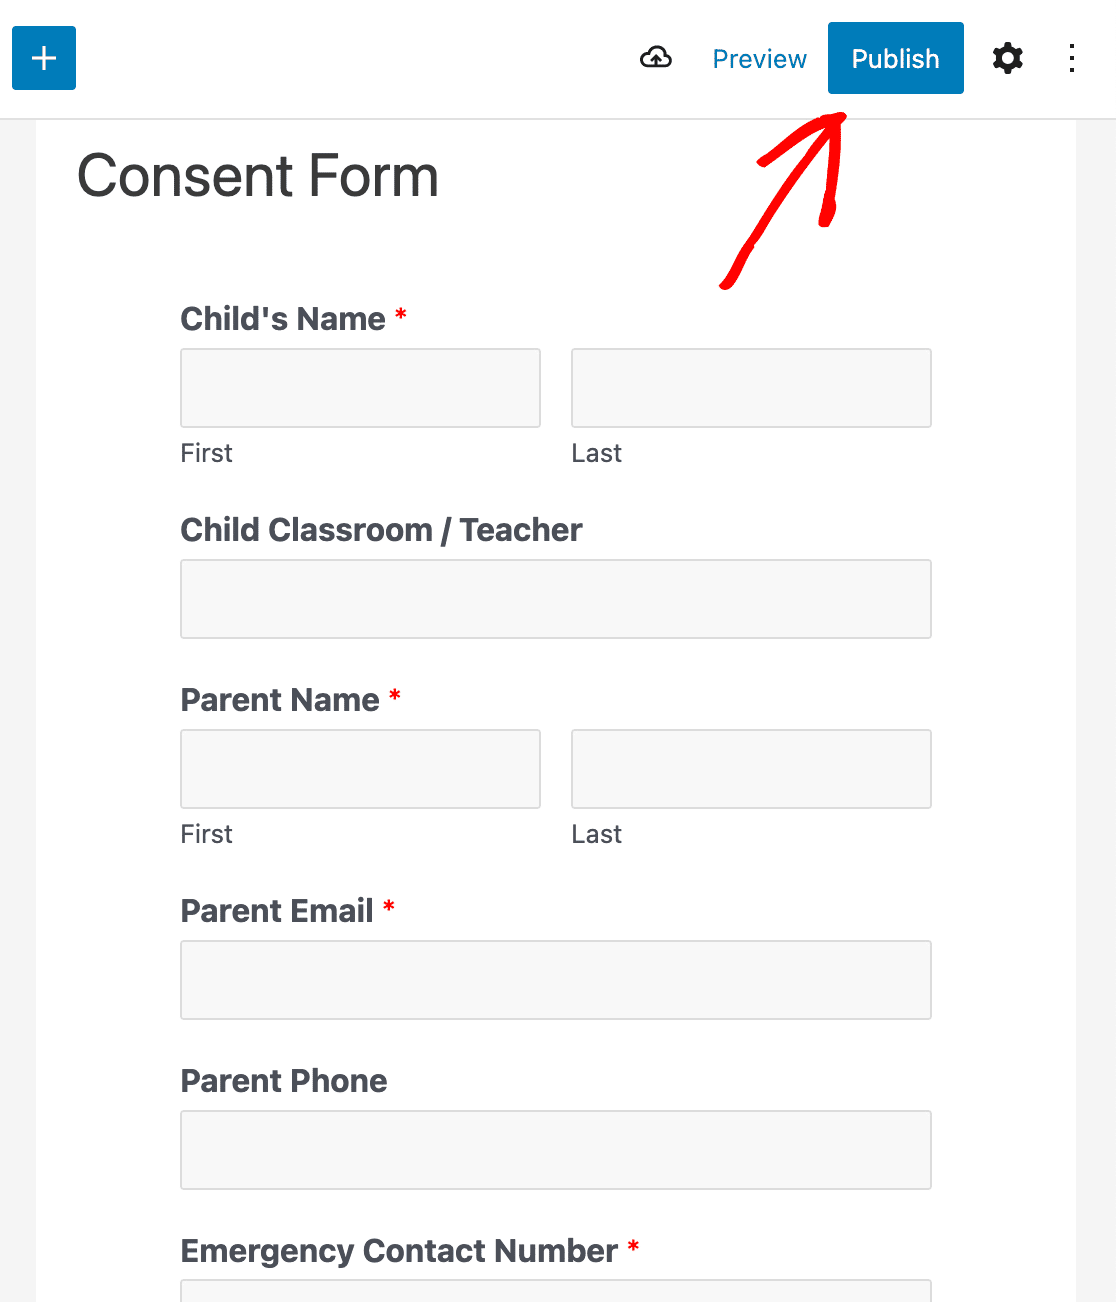 Publishing your parental consent form